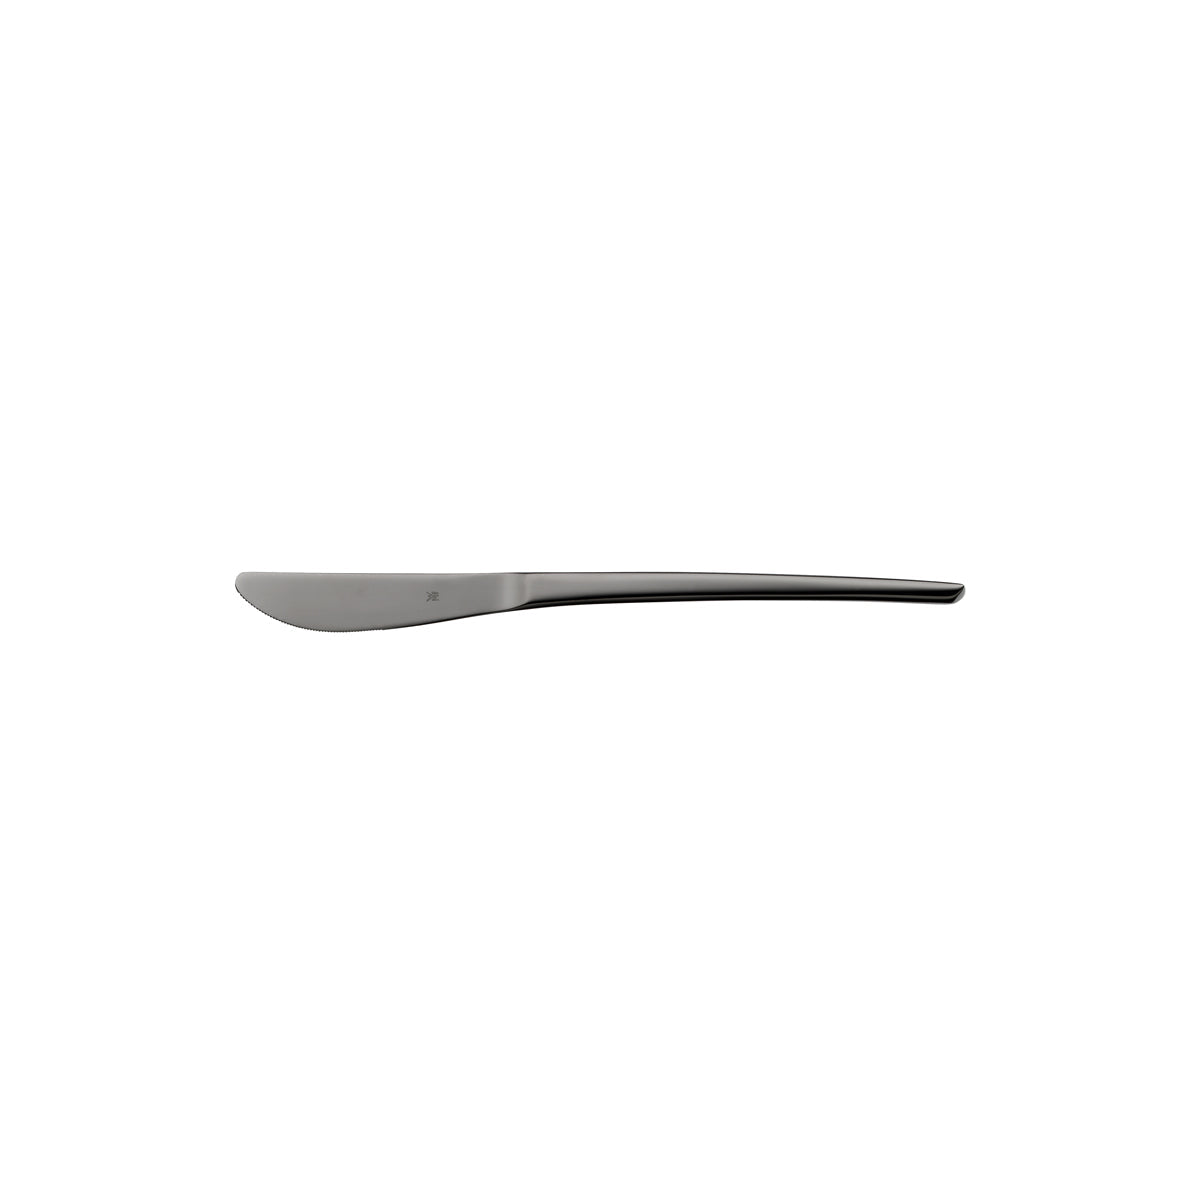 59.7203.8100 WMF Nordic Table Knife Gunmetal Tomkin Australia Hospitality Supplies